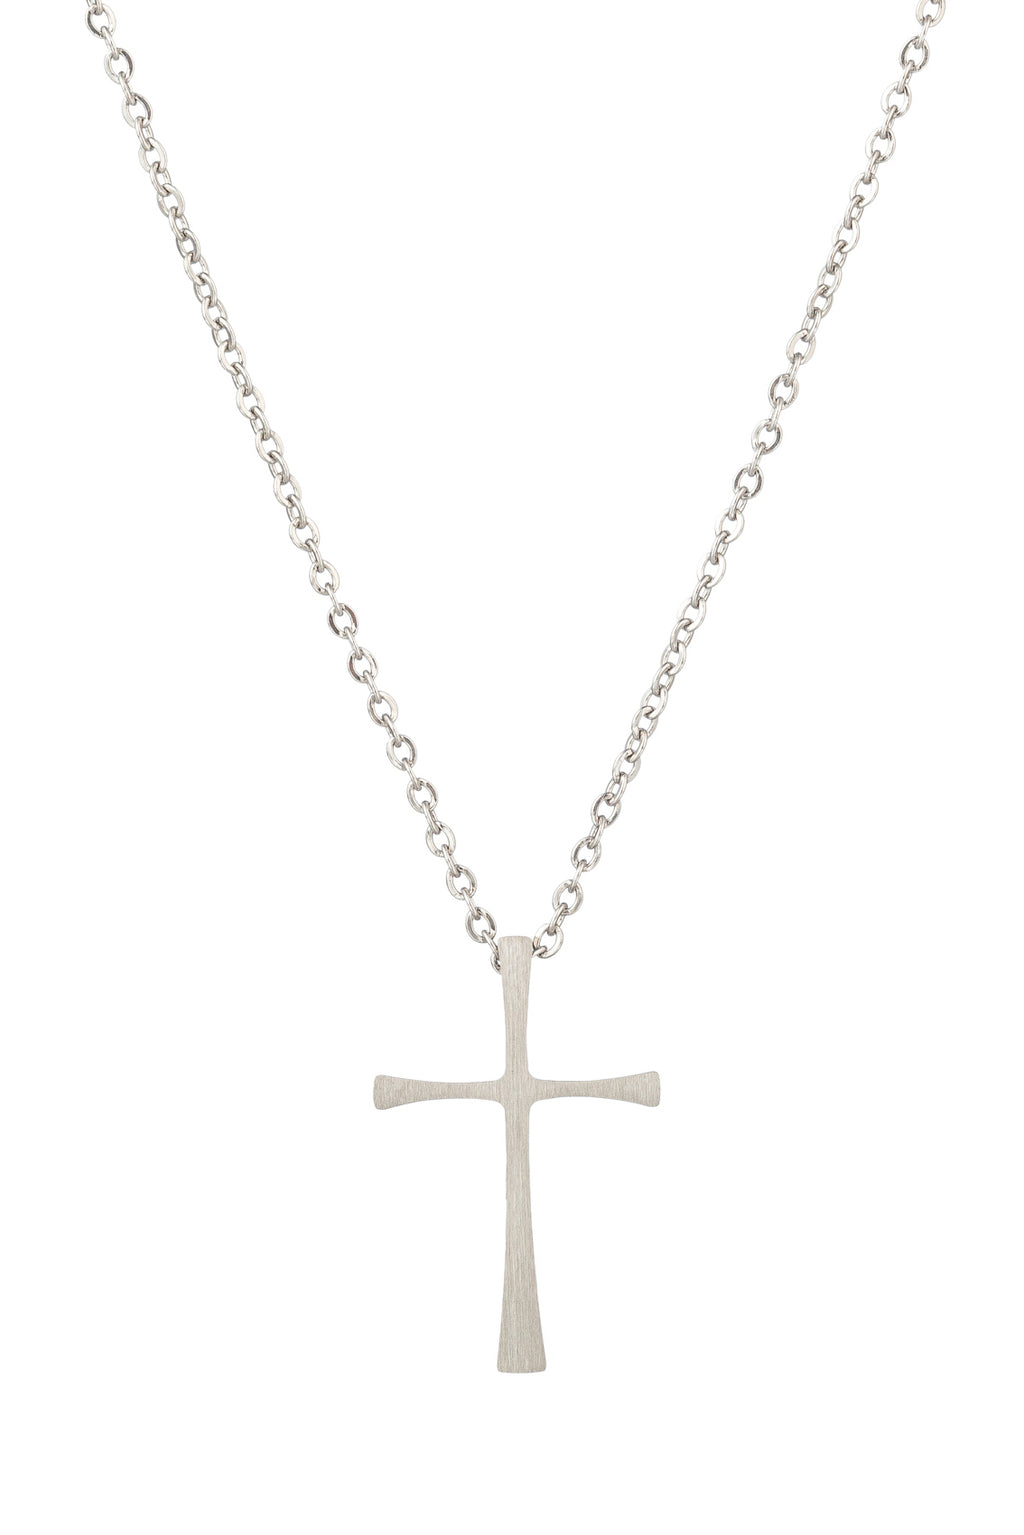 Silver tone titanium cross pendant necklace.